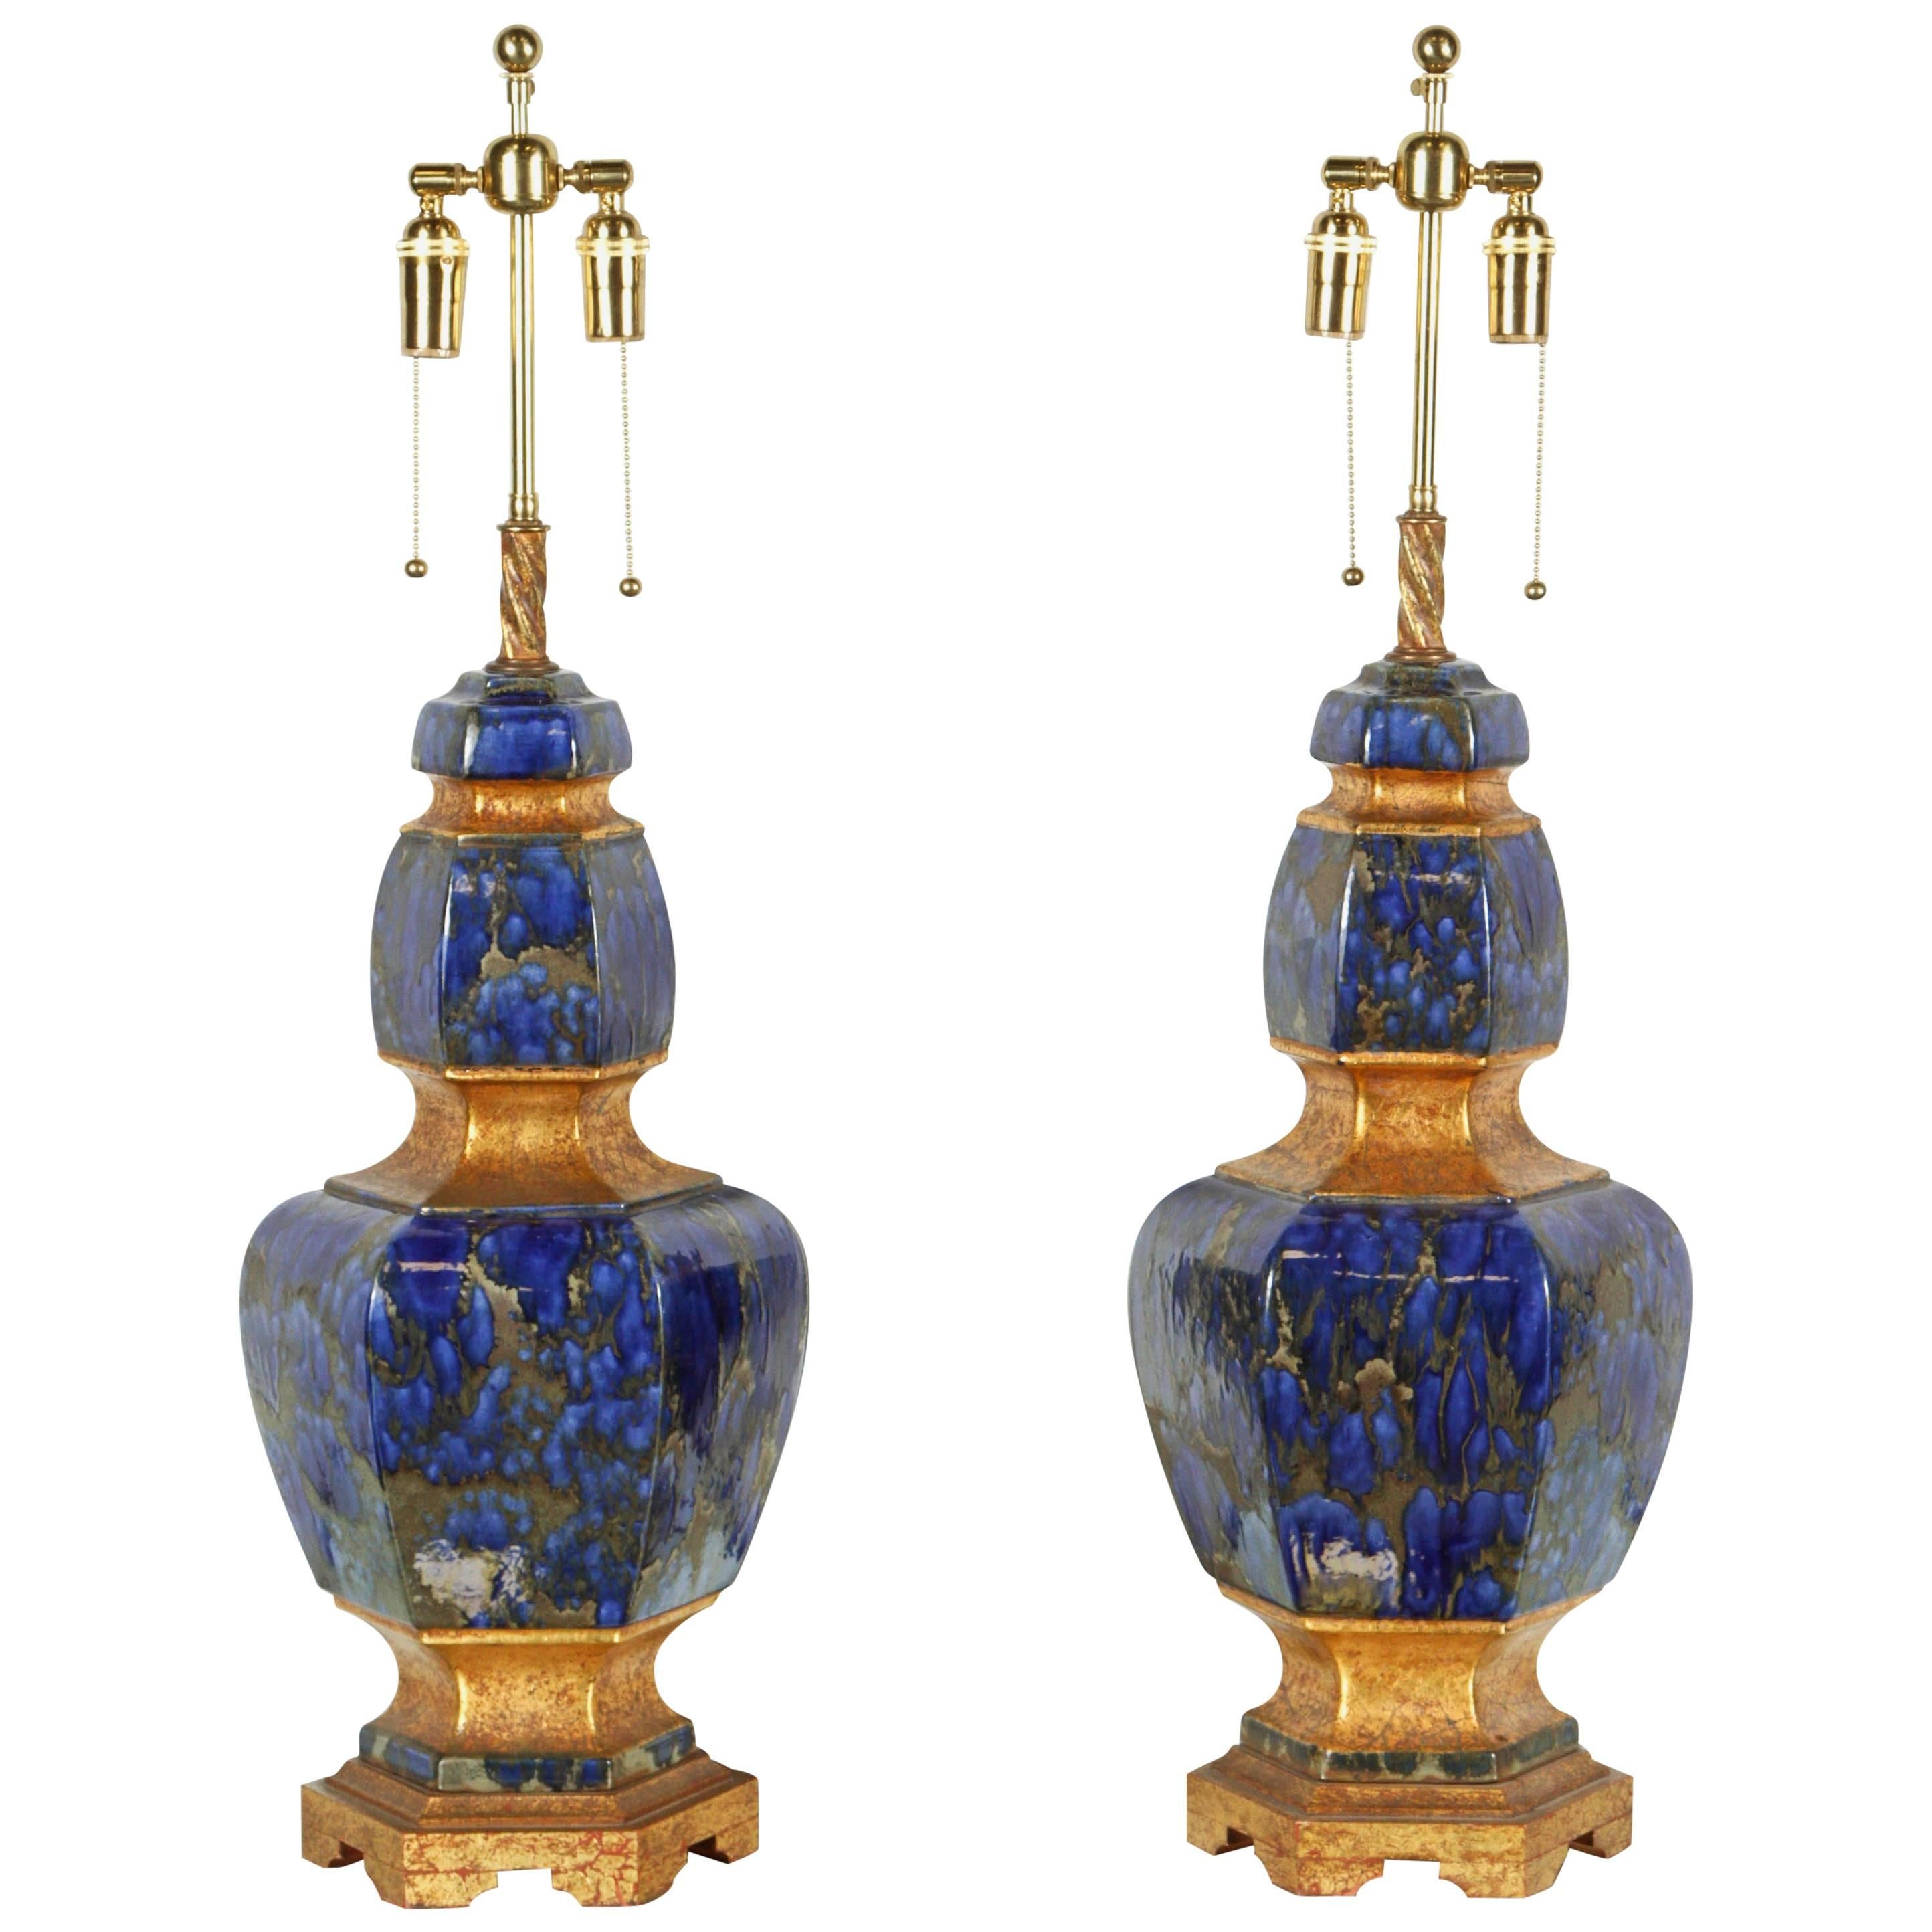 Exquisite Pair of Large Italian Ceramic Lamps with a Lapis Glazed Finish